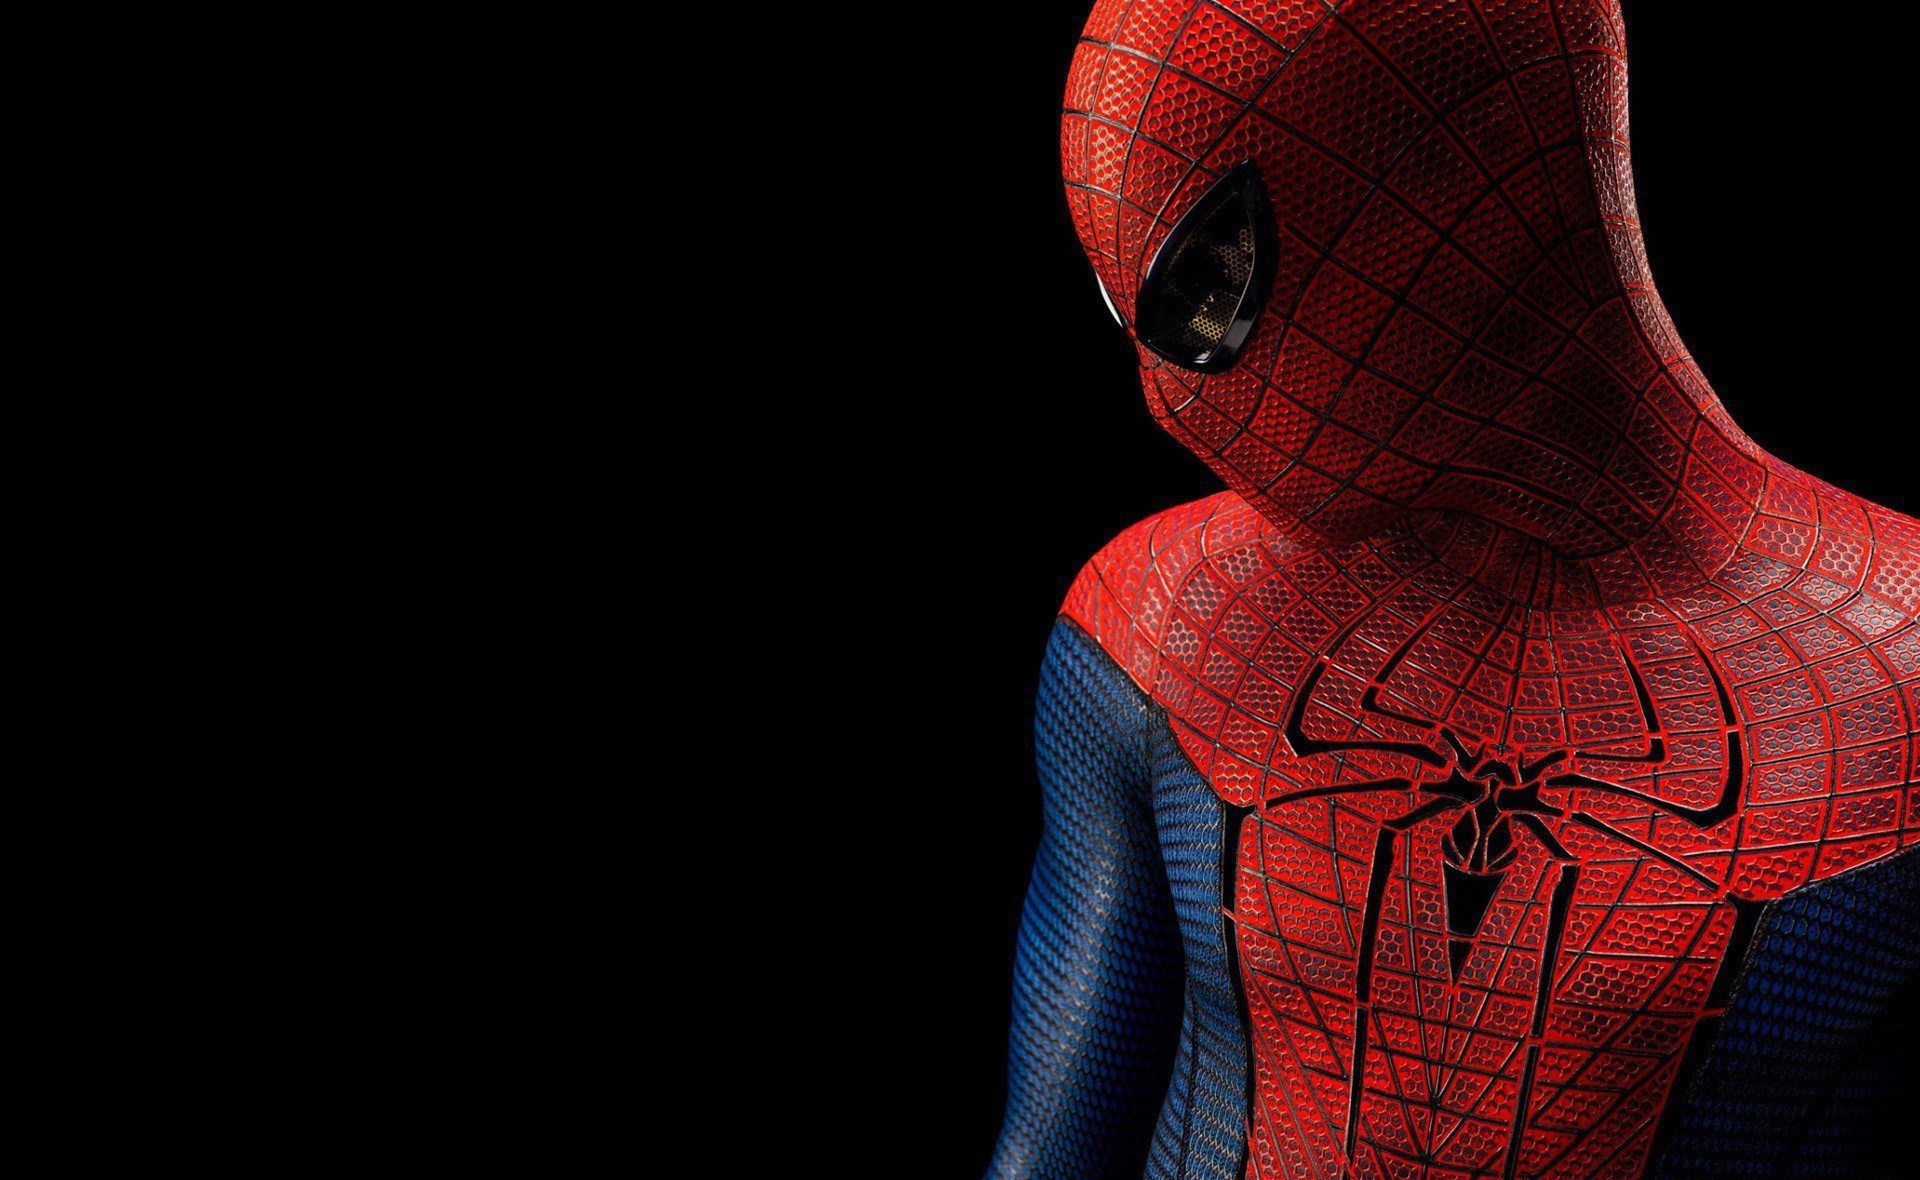 Black Background Spider Man Wallpaper And Image